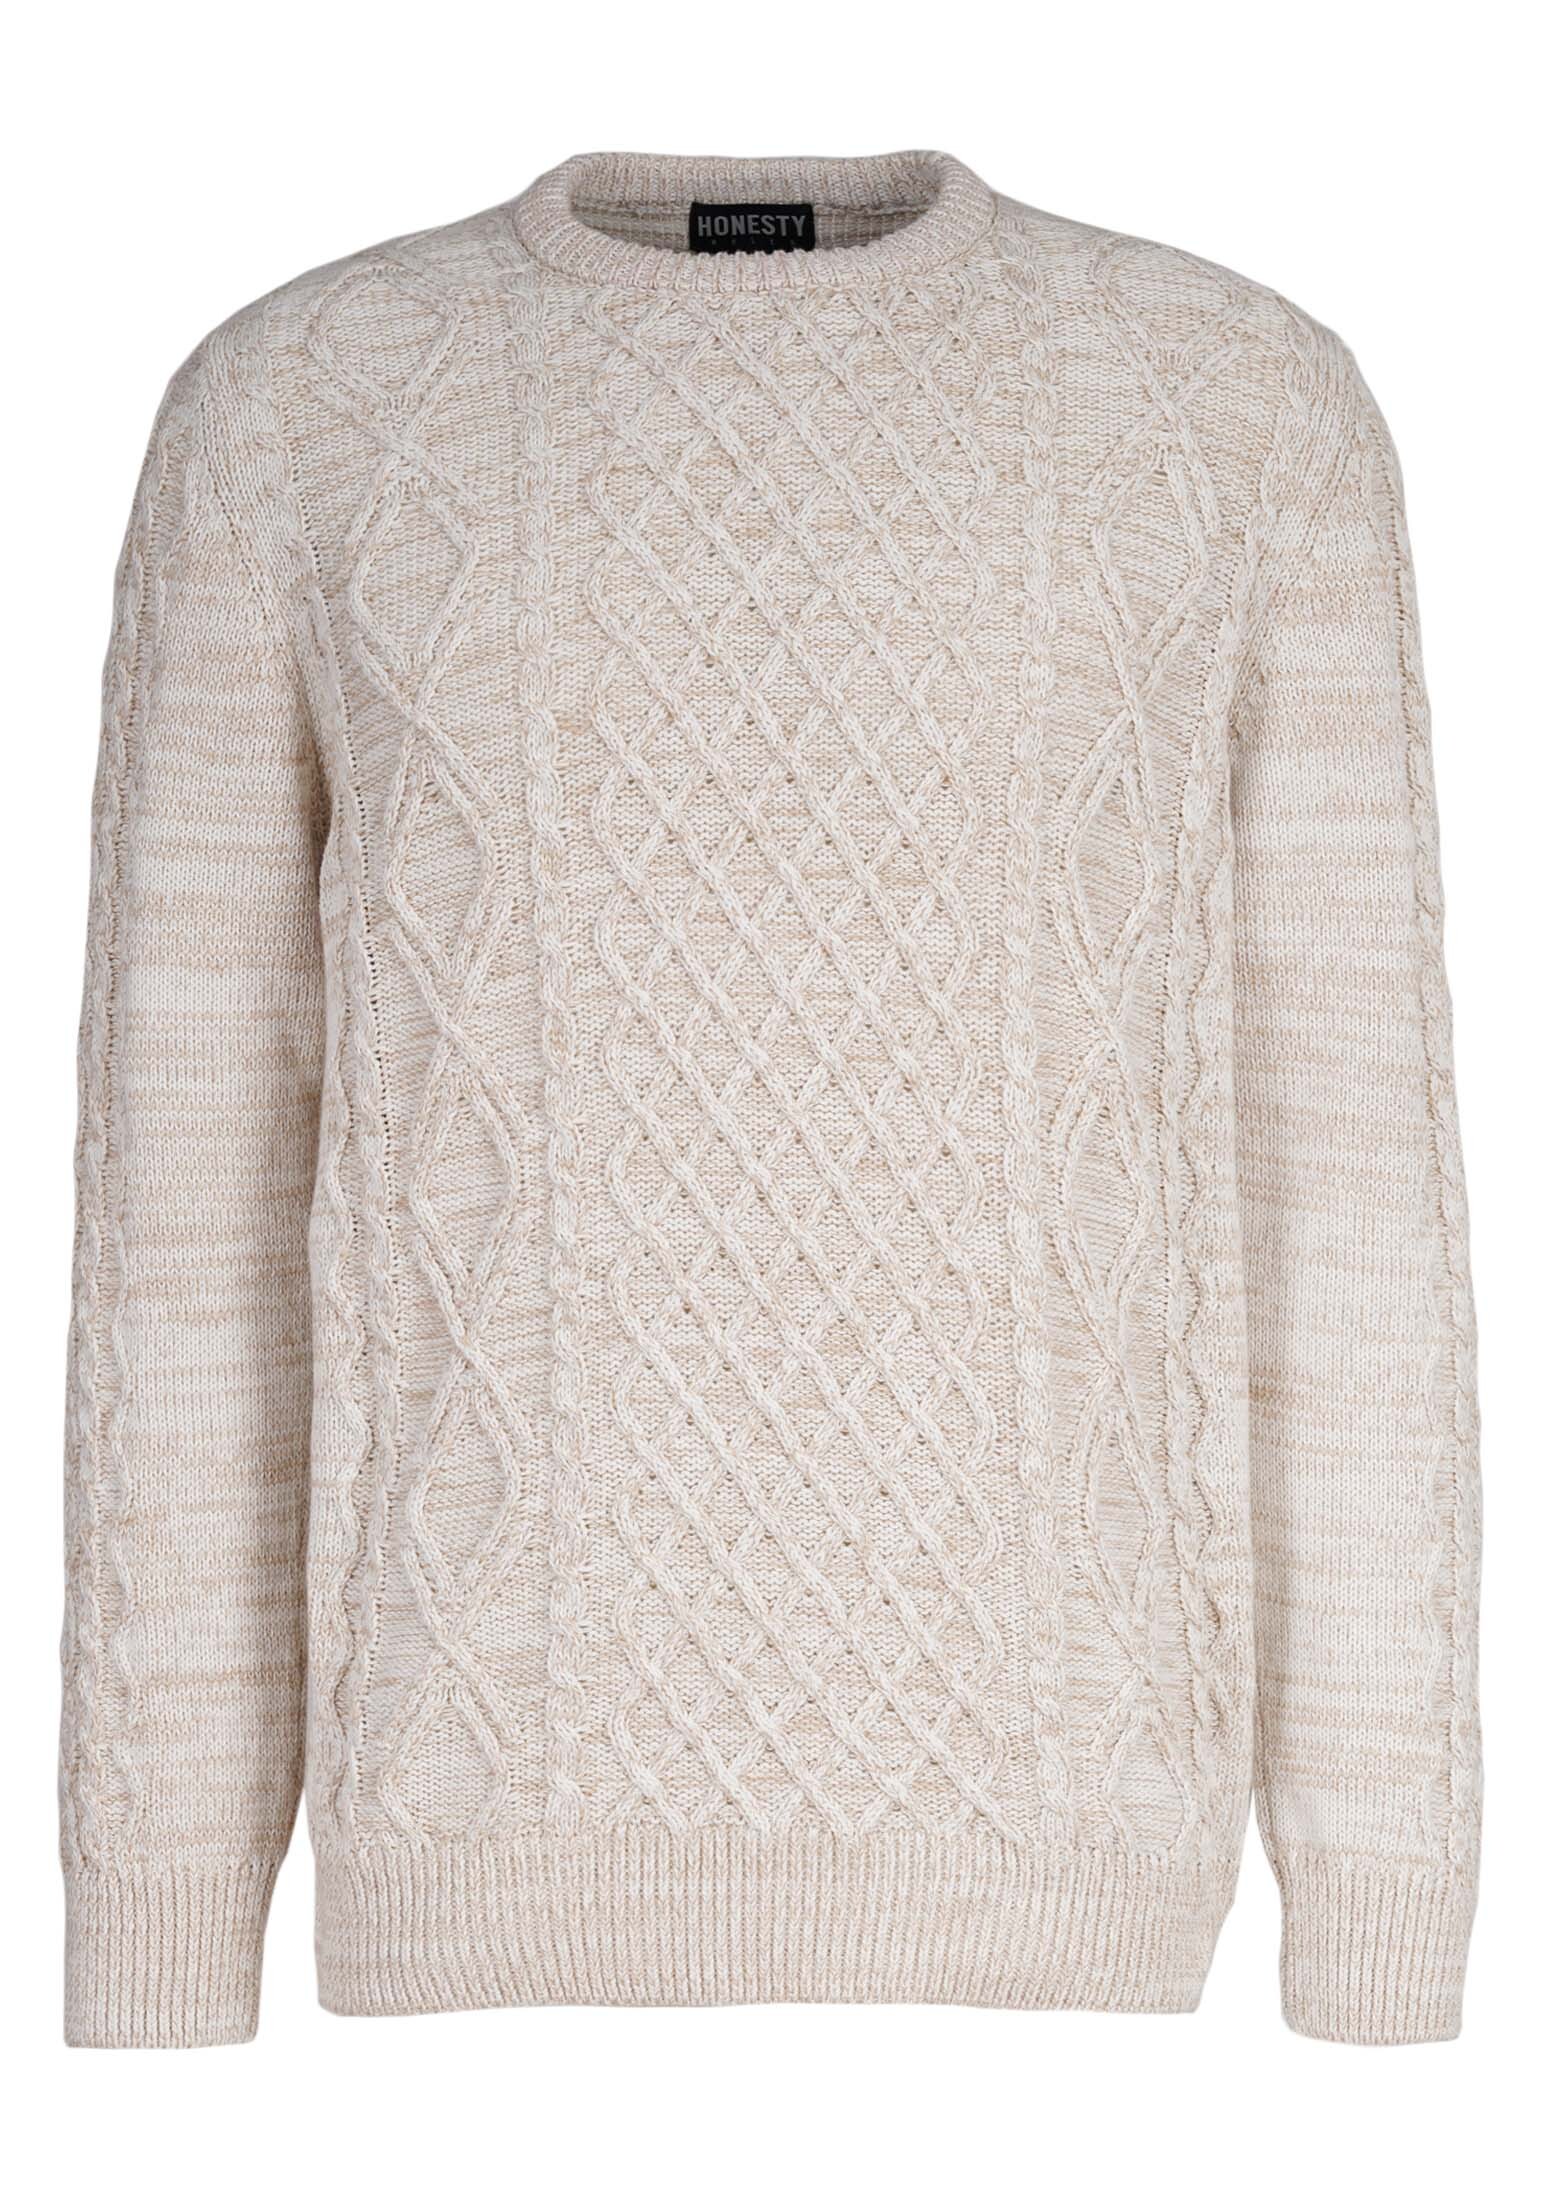 пуловер honesty rules strick jacquard цвет multi colors Пуловер HONESTY RULES Strick Cable, бежевый